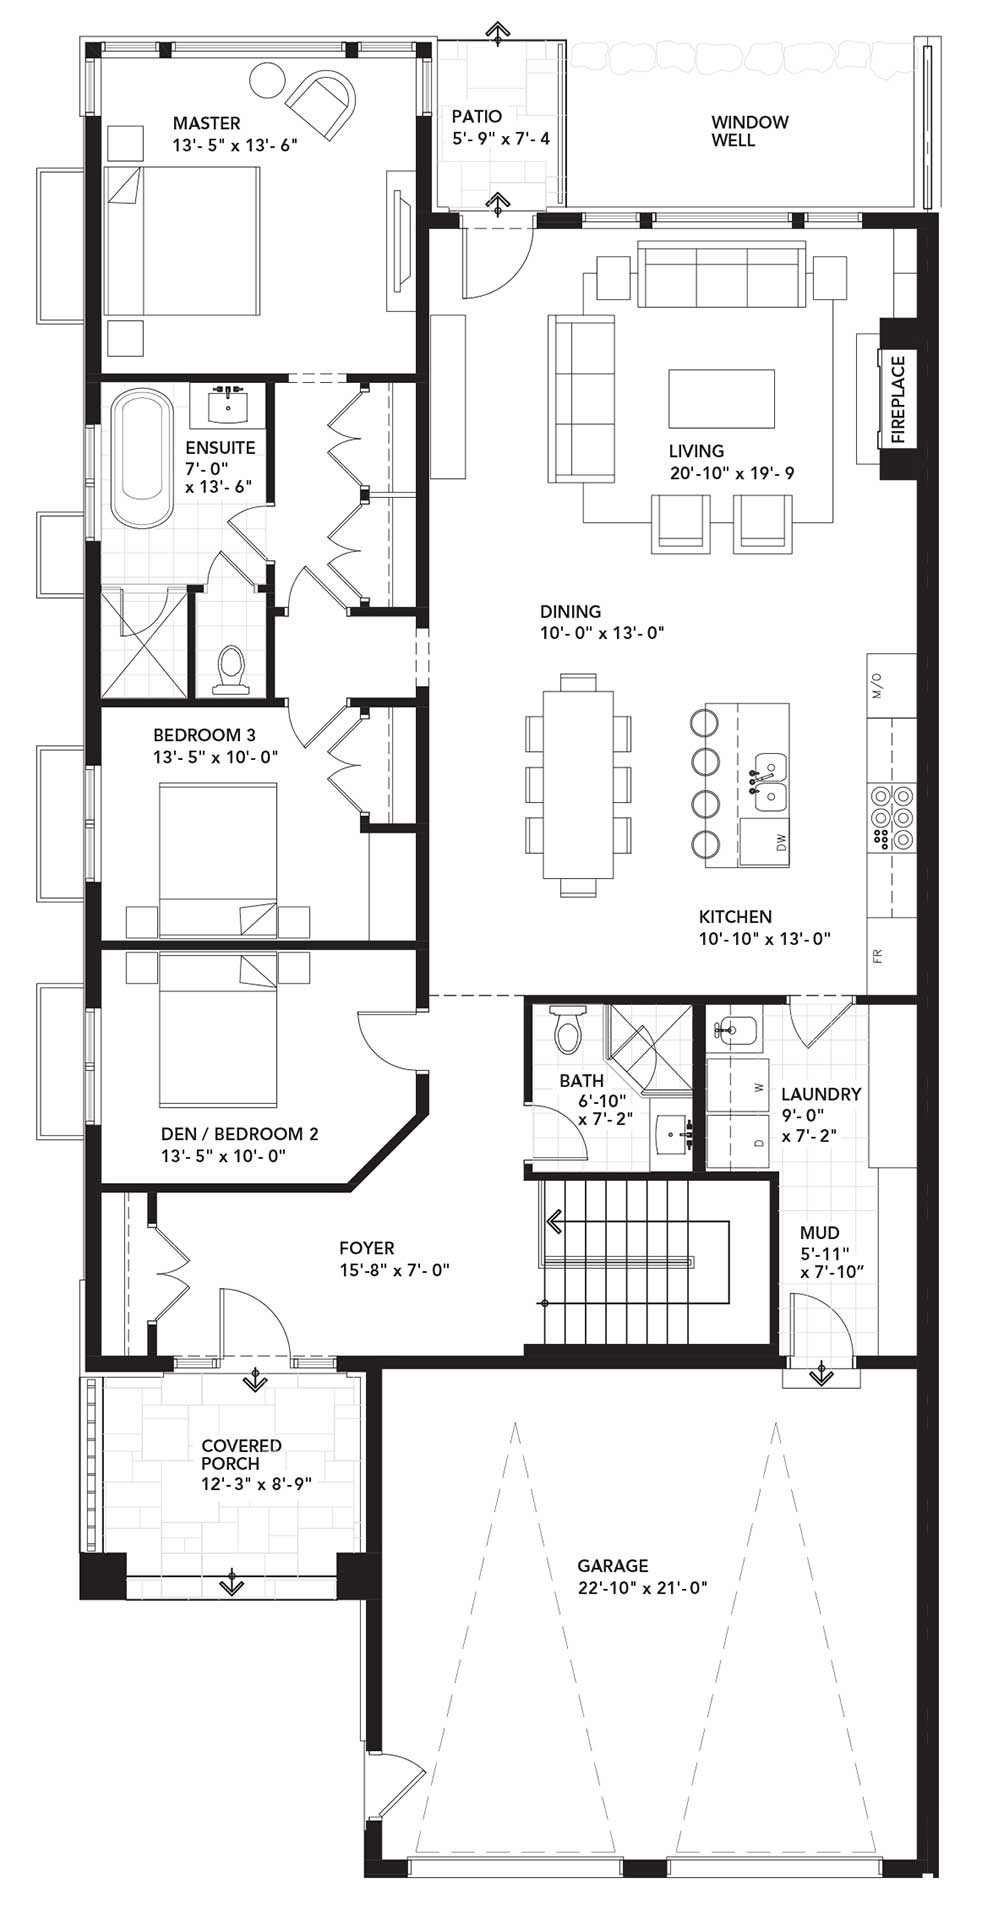 Main Floor Plan - Three Bedroom - Left Unit